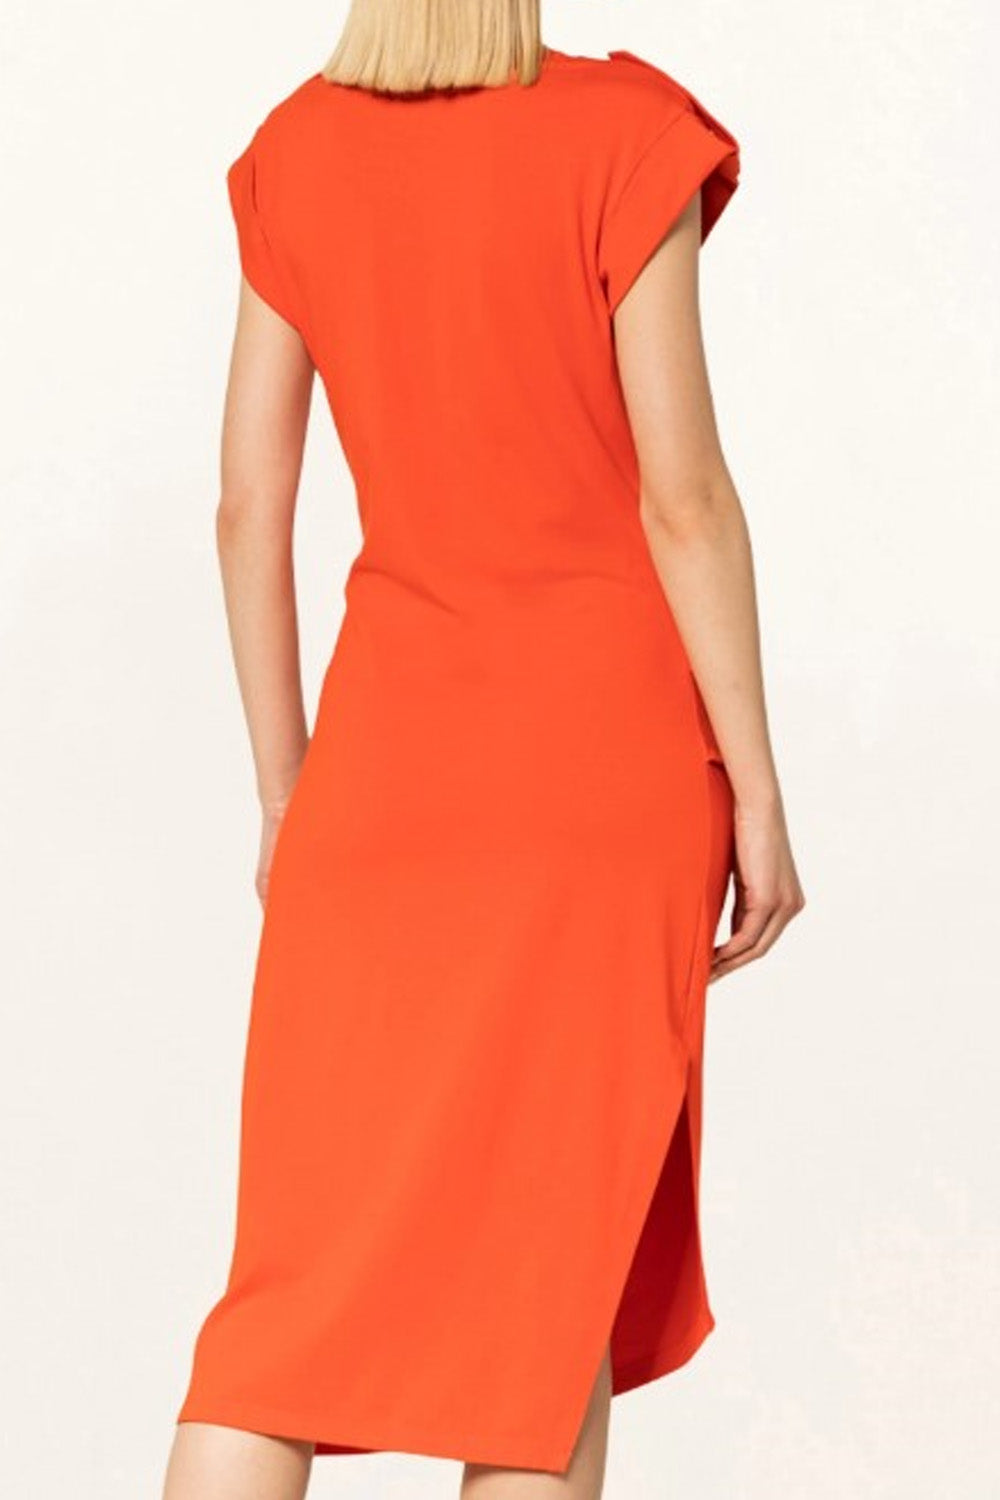 Mellifluous Orange Dress